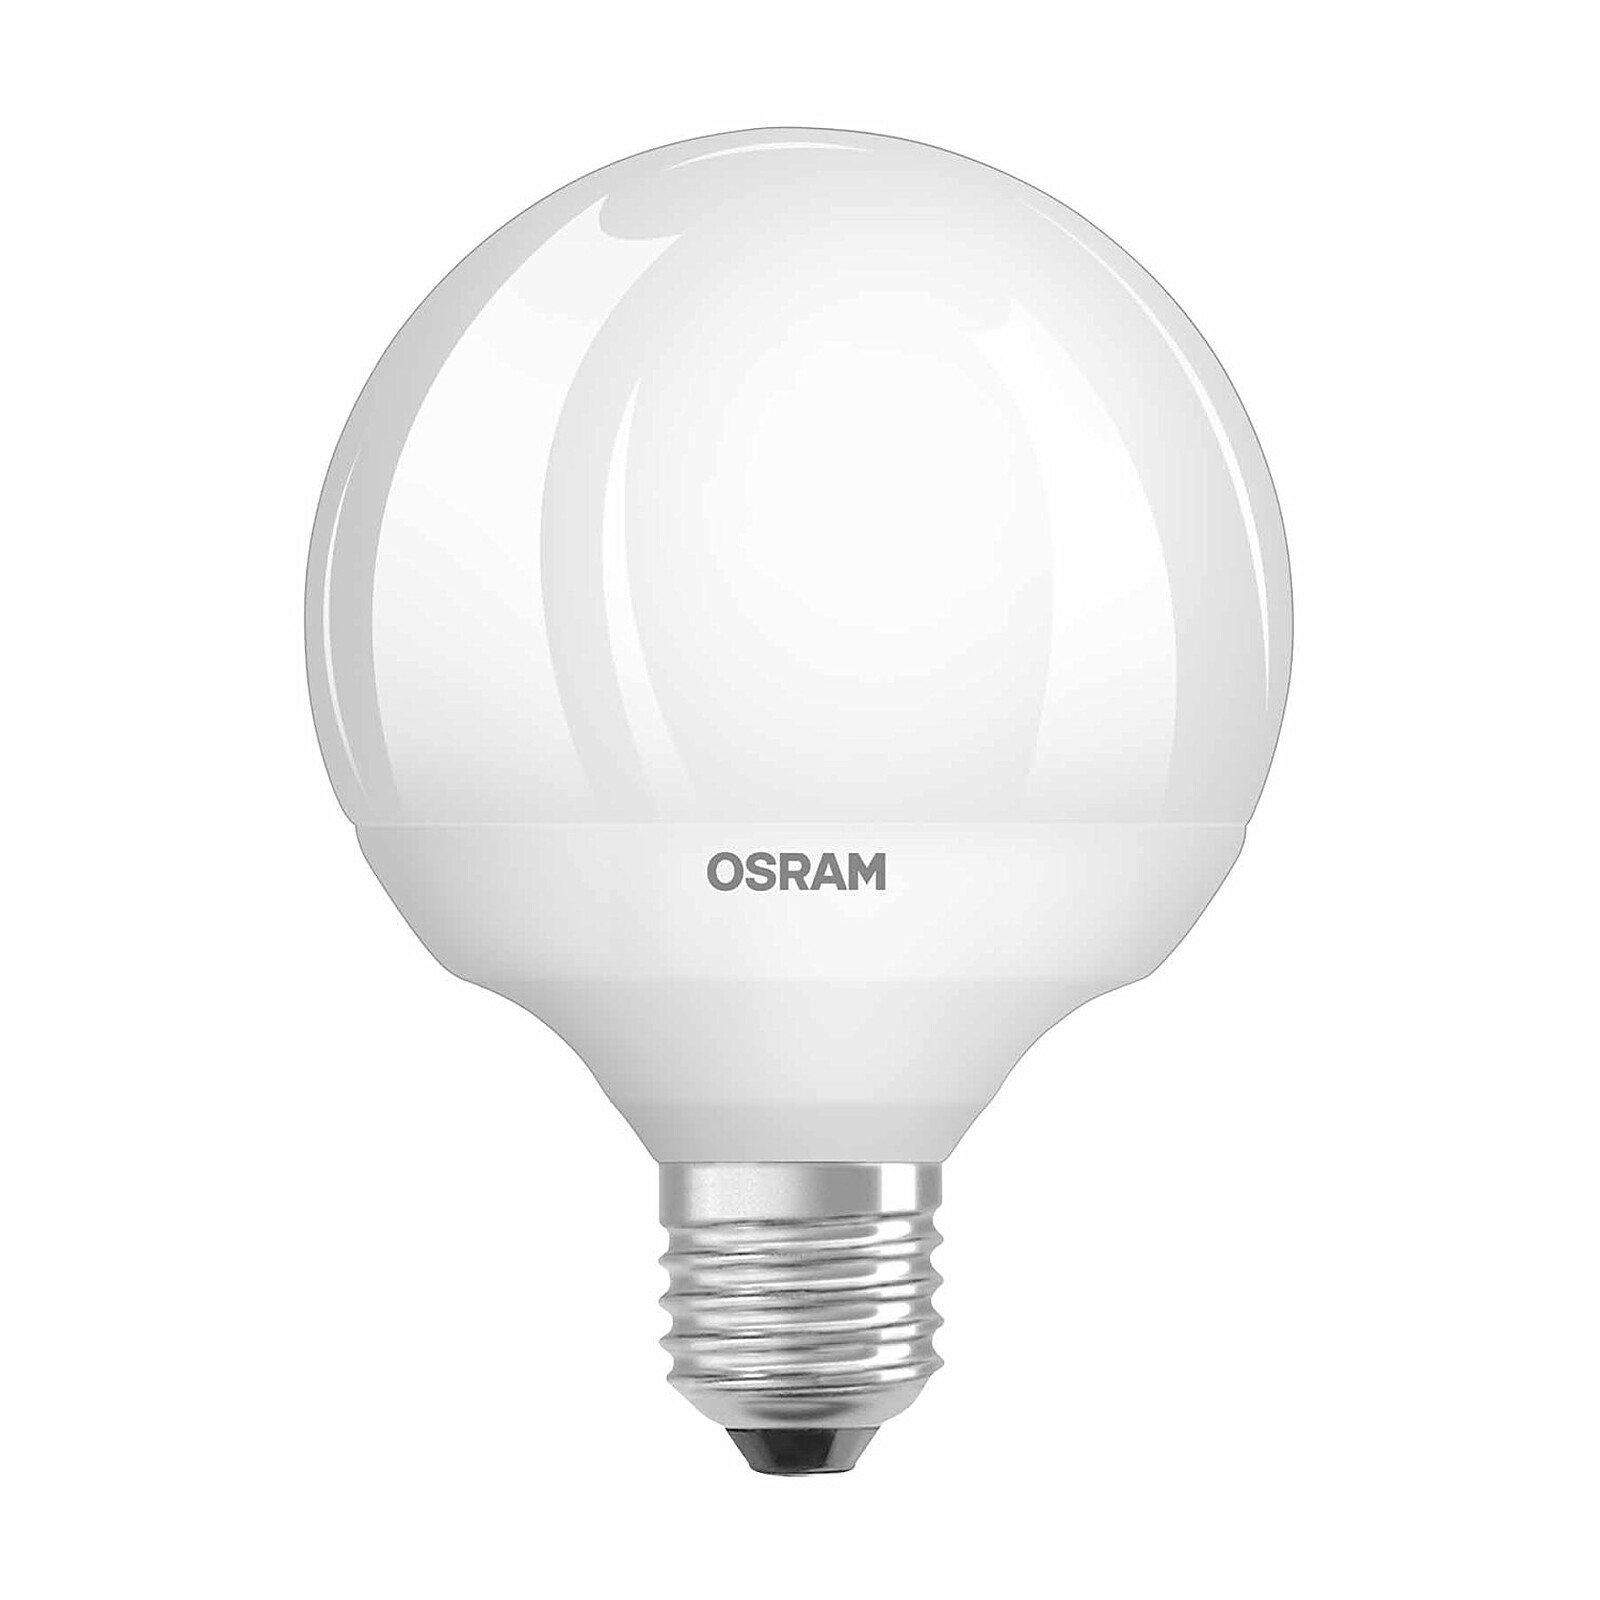 OSRAM Ampoule LED Star Classic globe E27 13W (75W) A+ - Ampoule